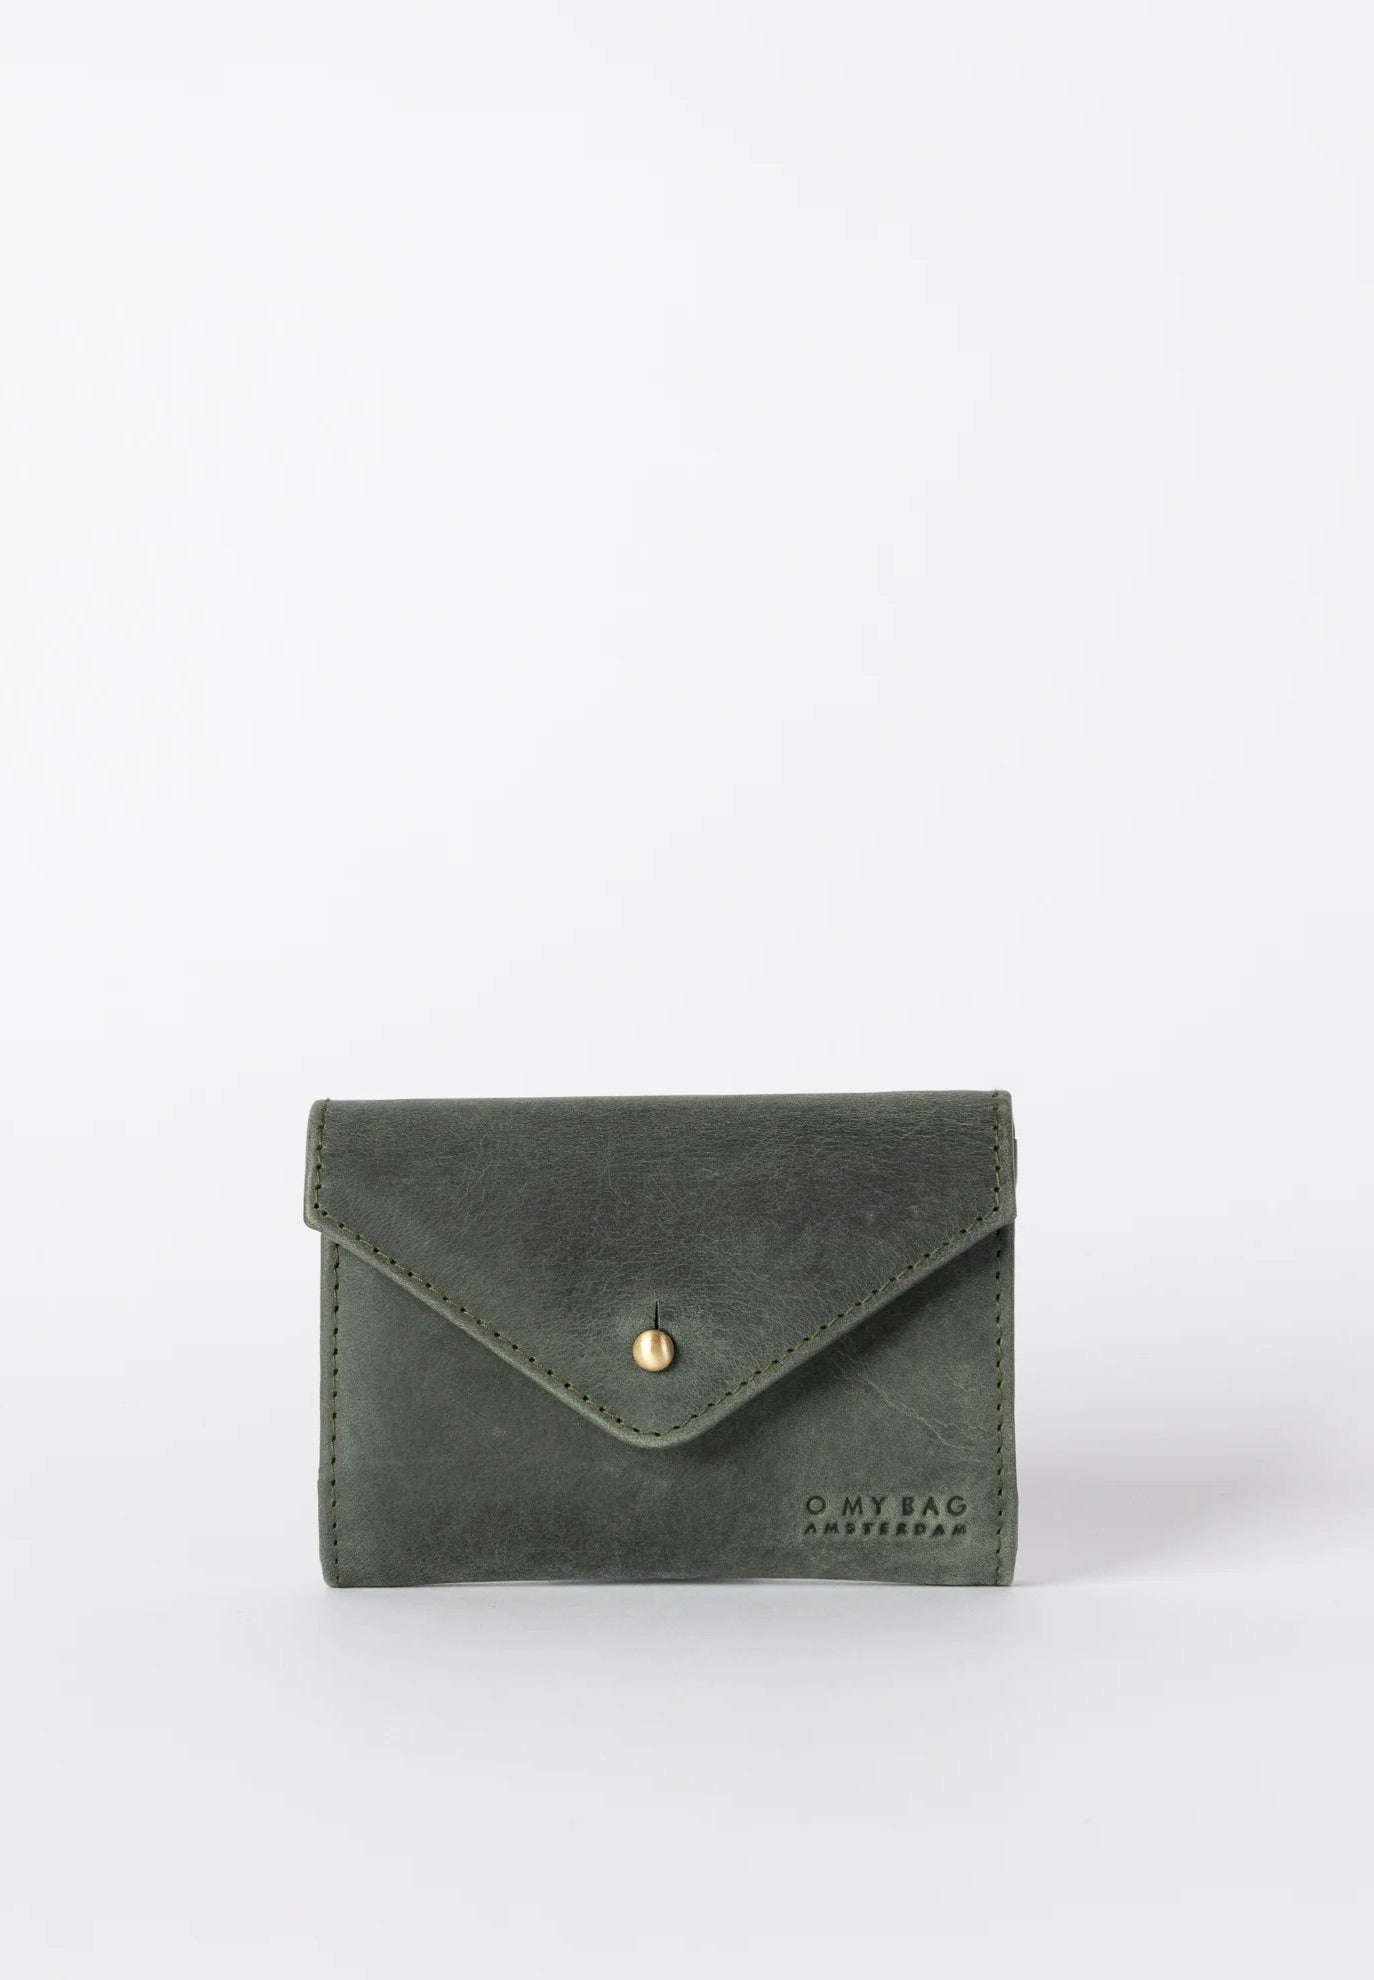 josie's purse green hunter leather